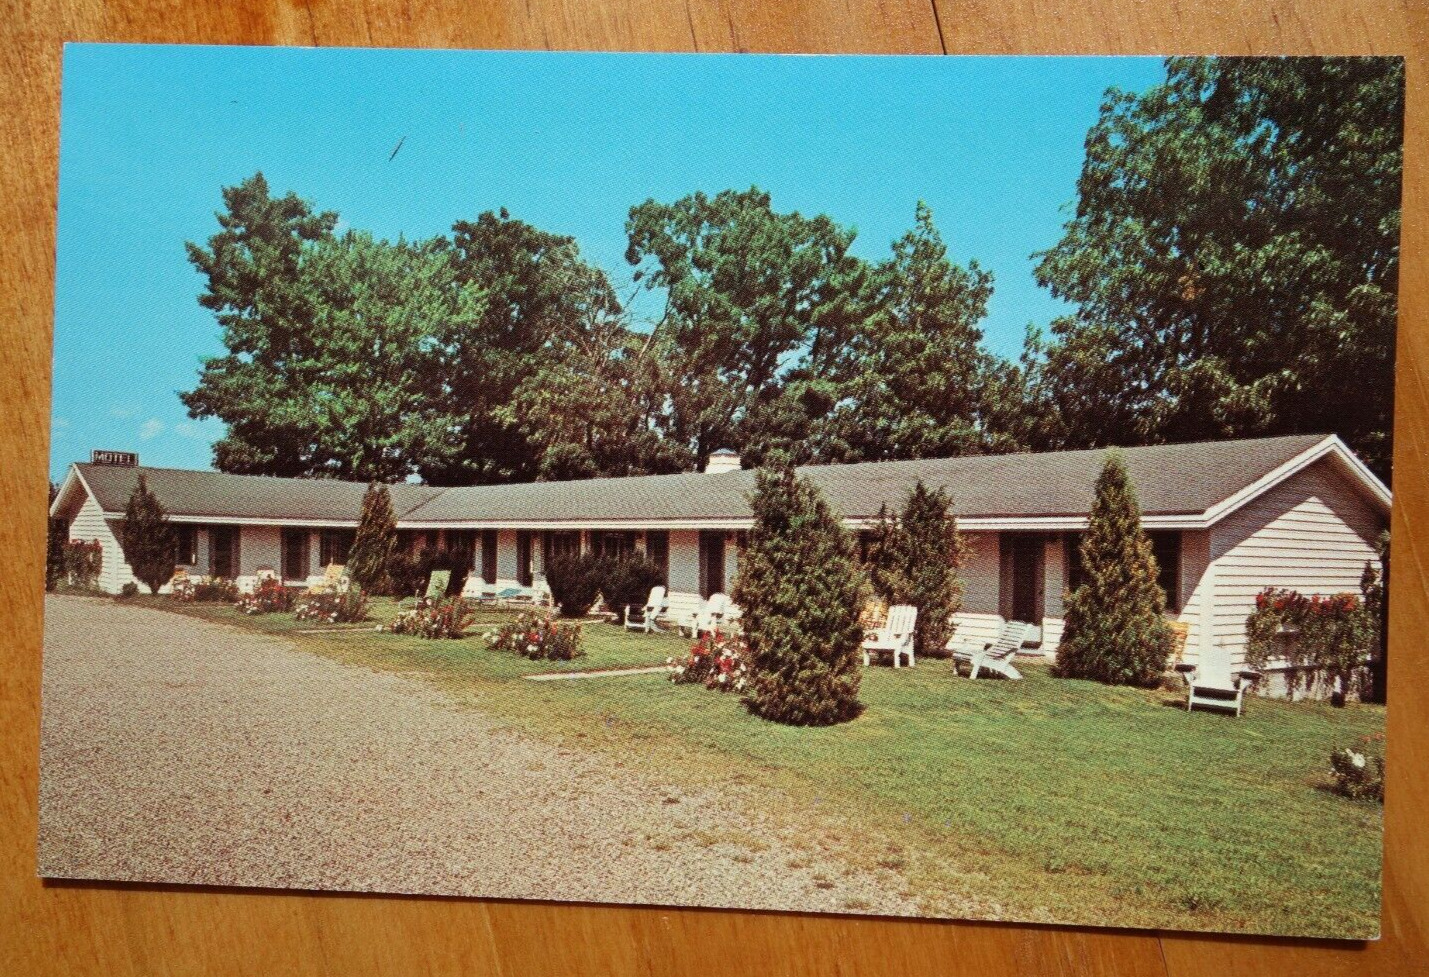 Pasture Spring Motel, Ogunquit MAINE postcard chrome demolished